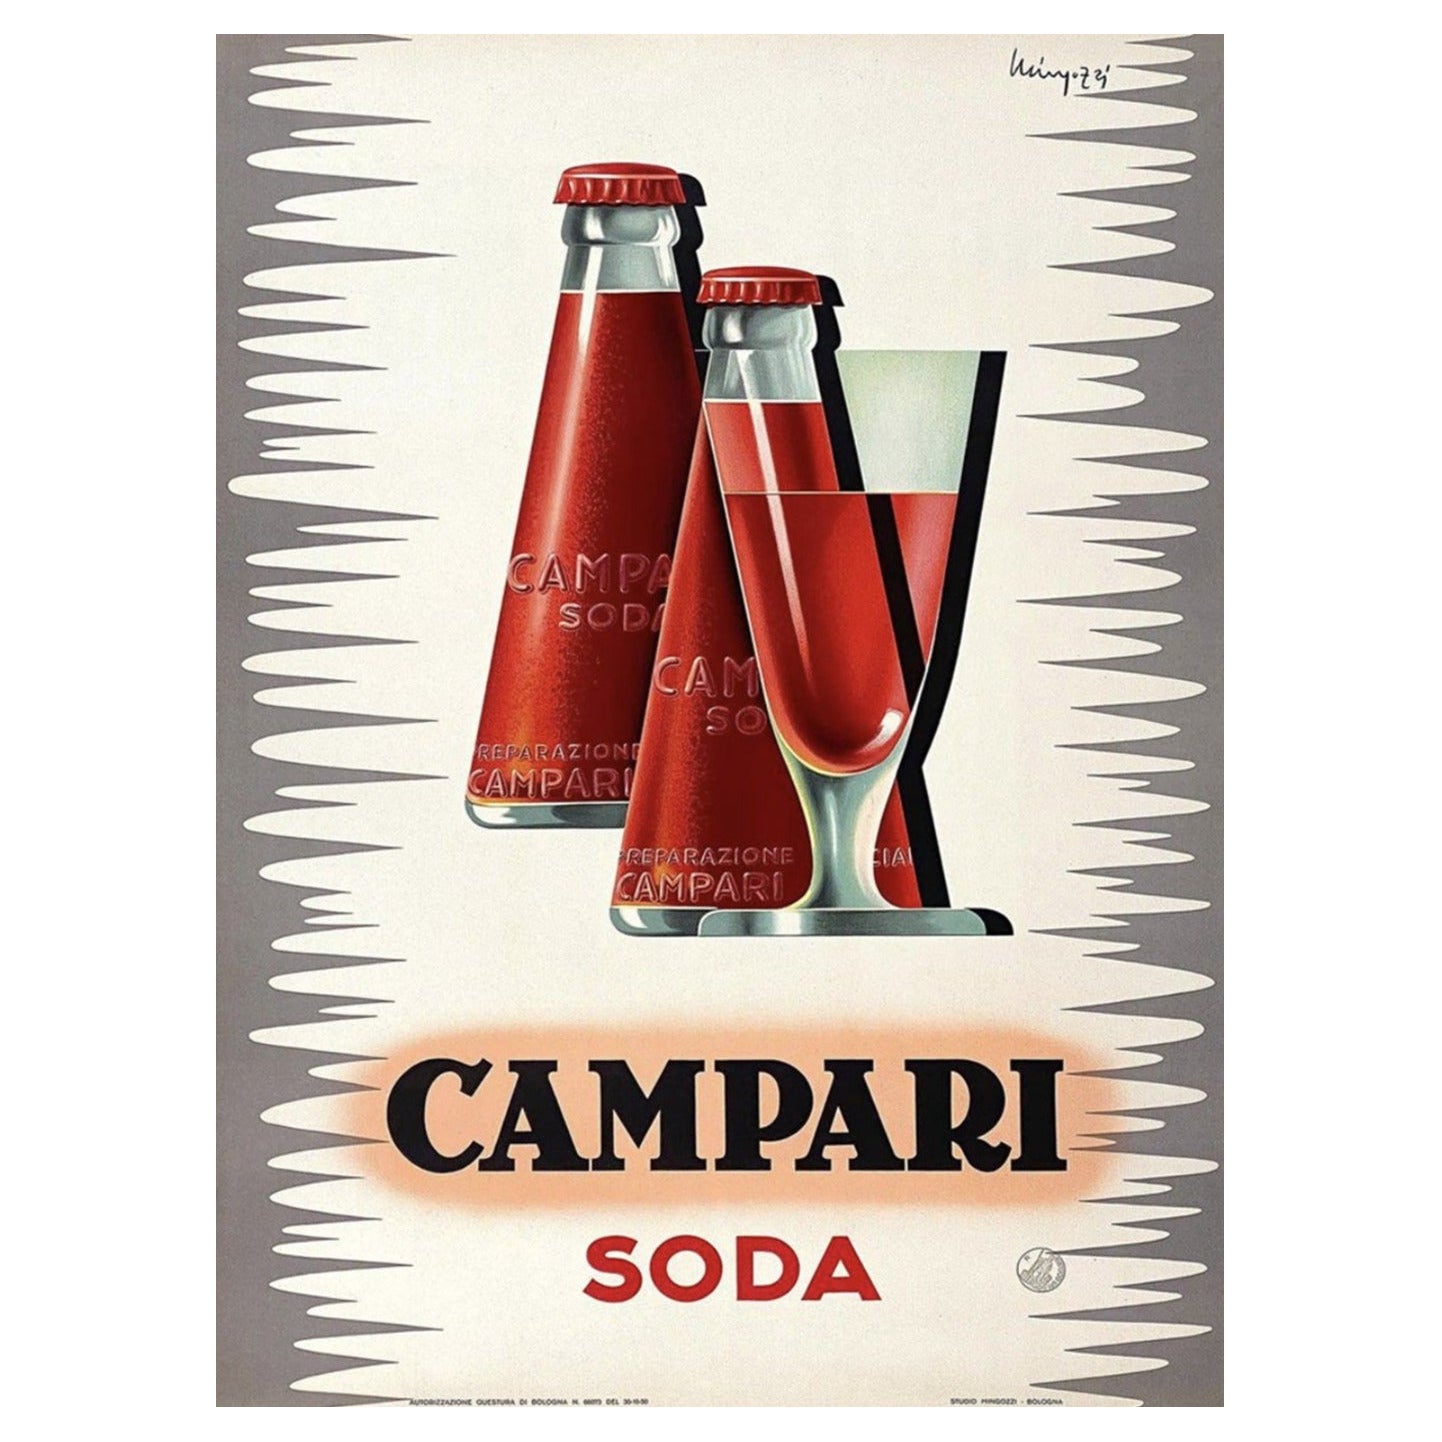 Original-Vintage-Poster, Campari Soda, Mingozzi, 1950